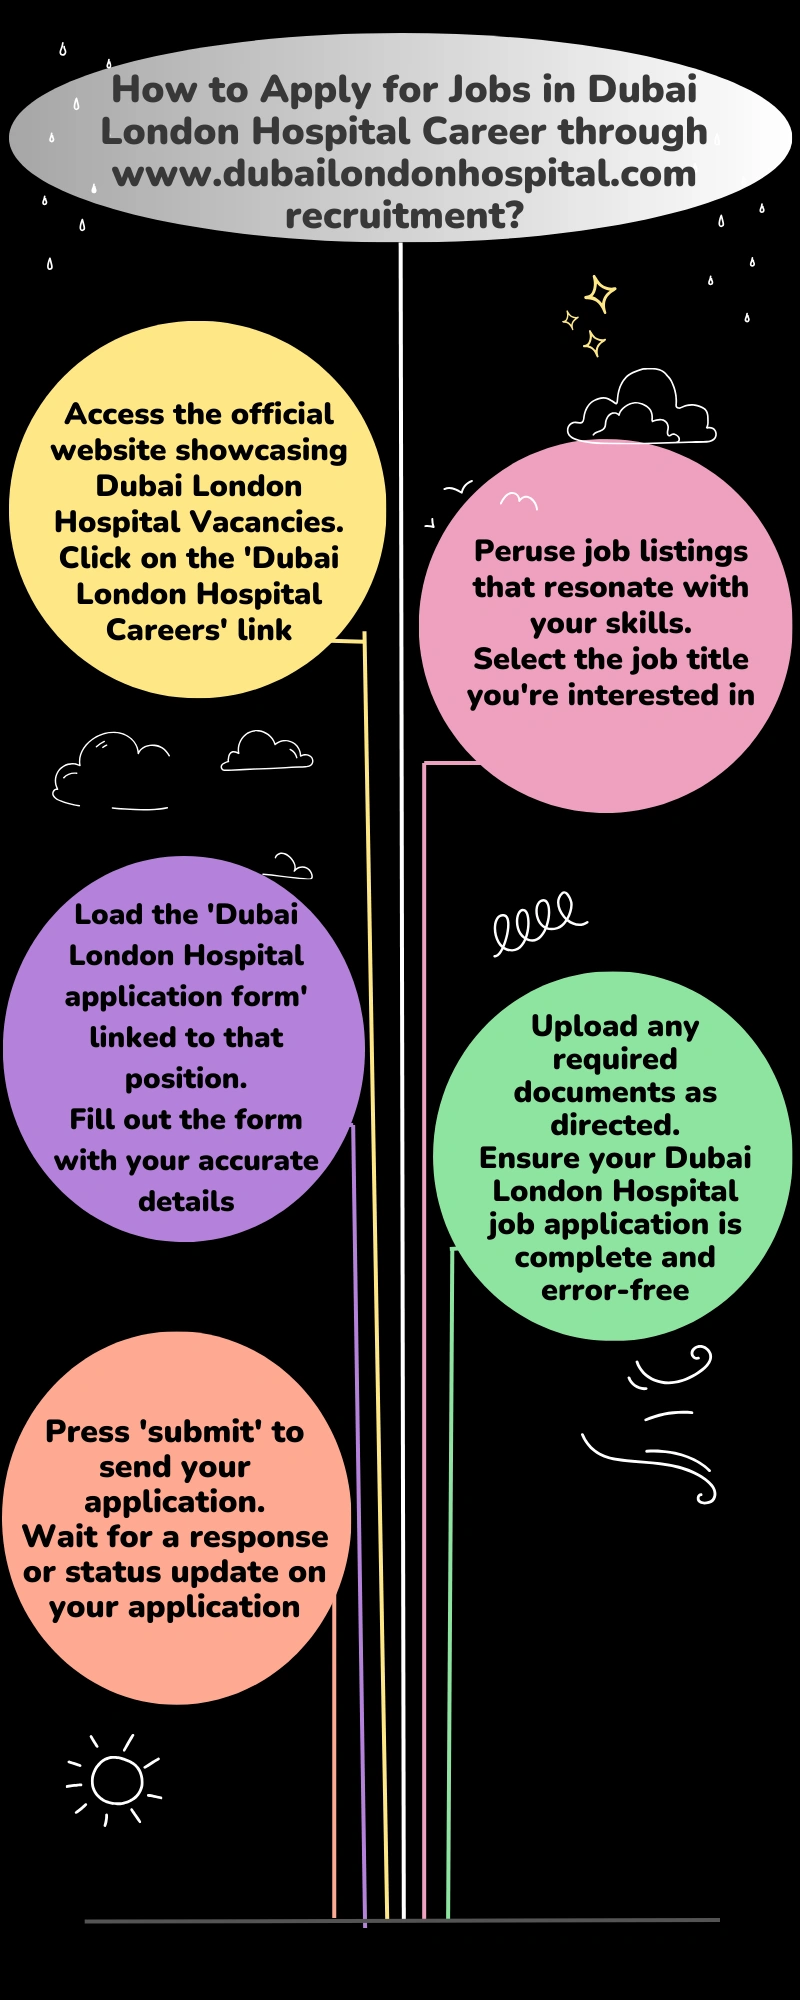 How to Apply for Jobs in Dubai London Hospital Career through www.dubailondonhospital.com recruitment?